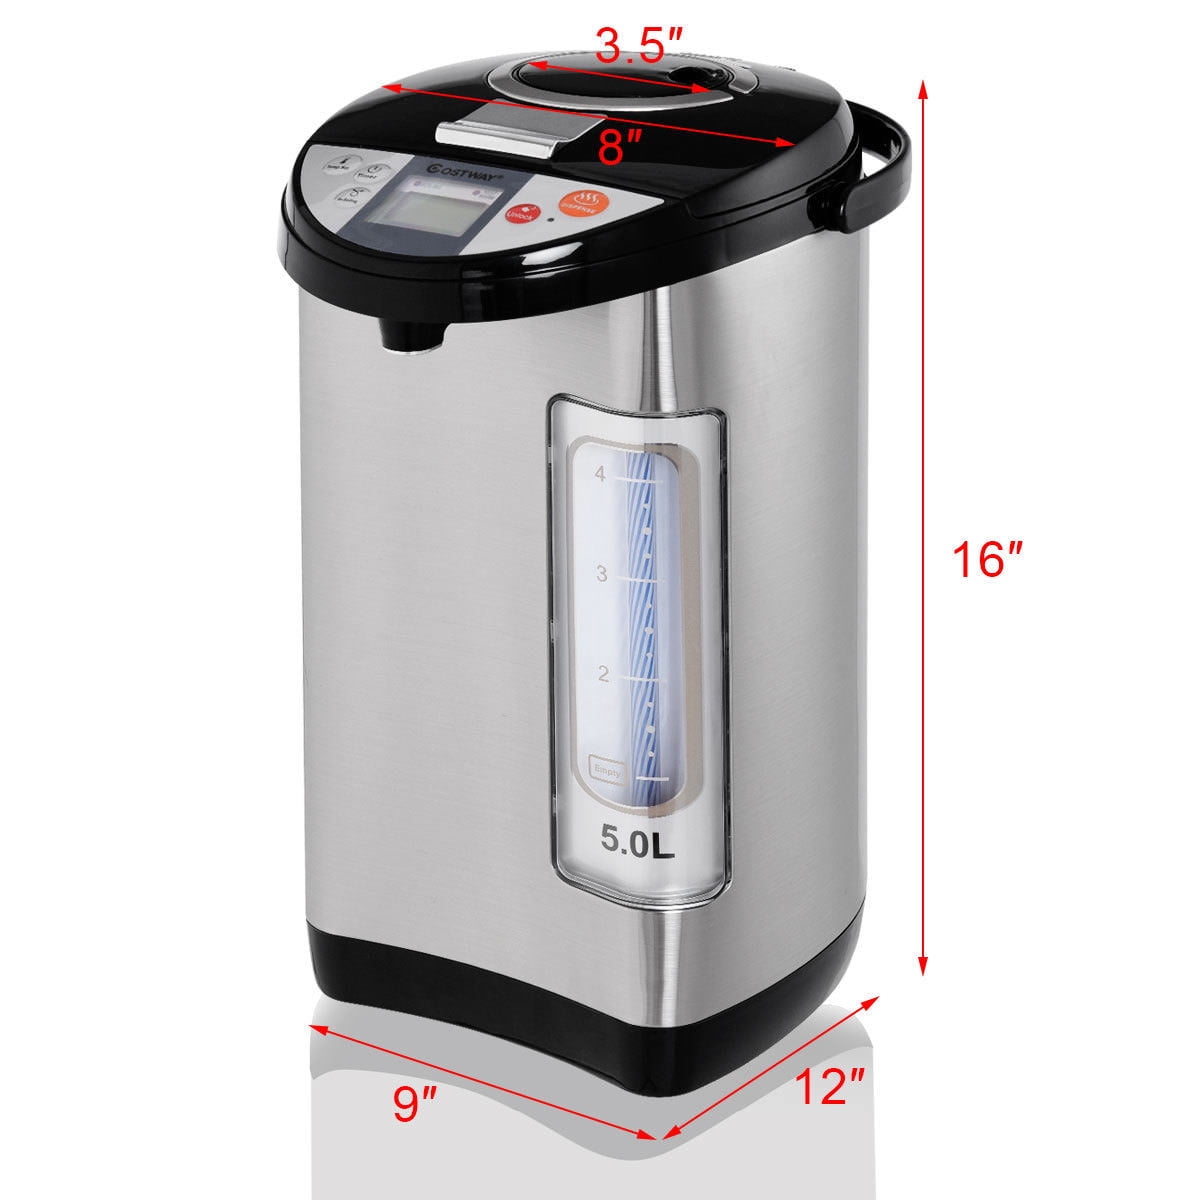 Costway 5-Liter LCD Water Boiler and Warmer Electric Hot Pot Kettle Hot Water Dispenser - 1